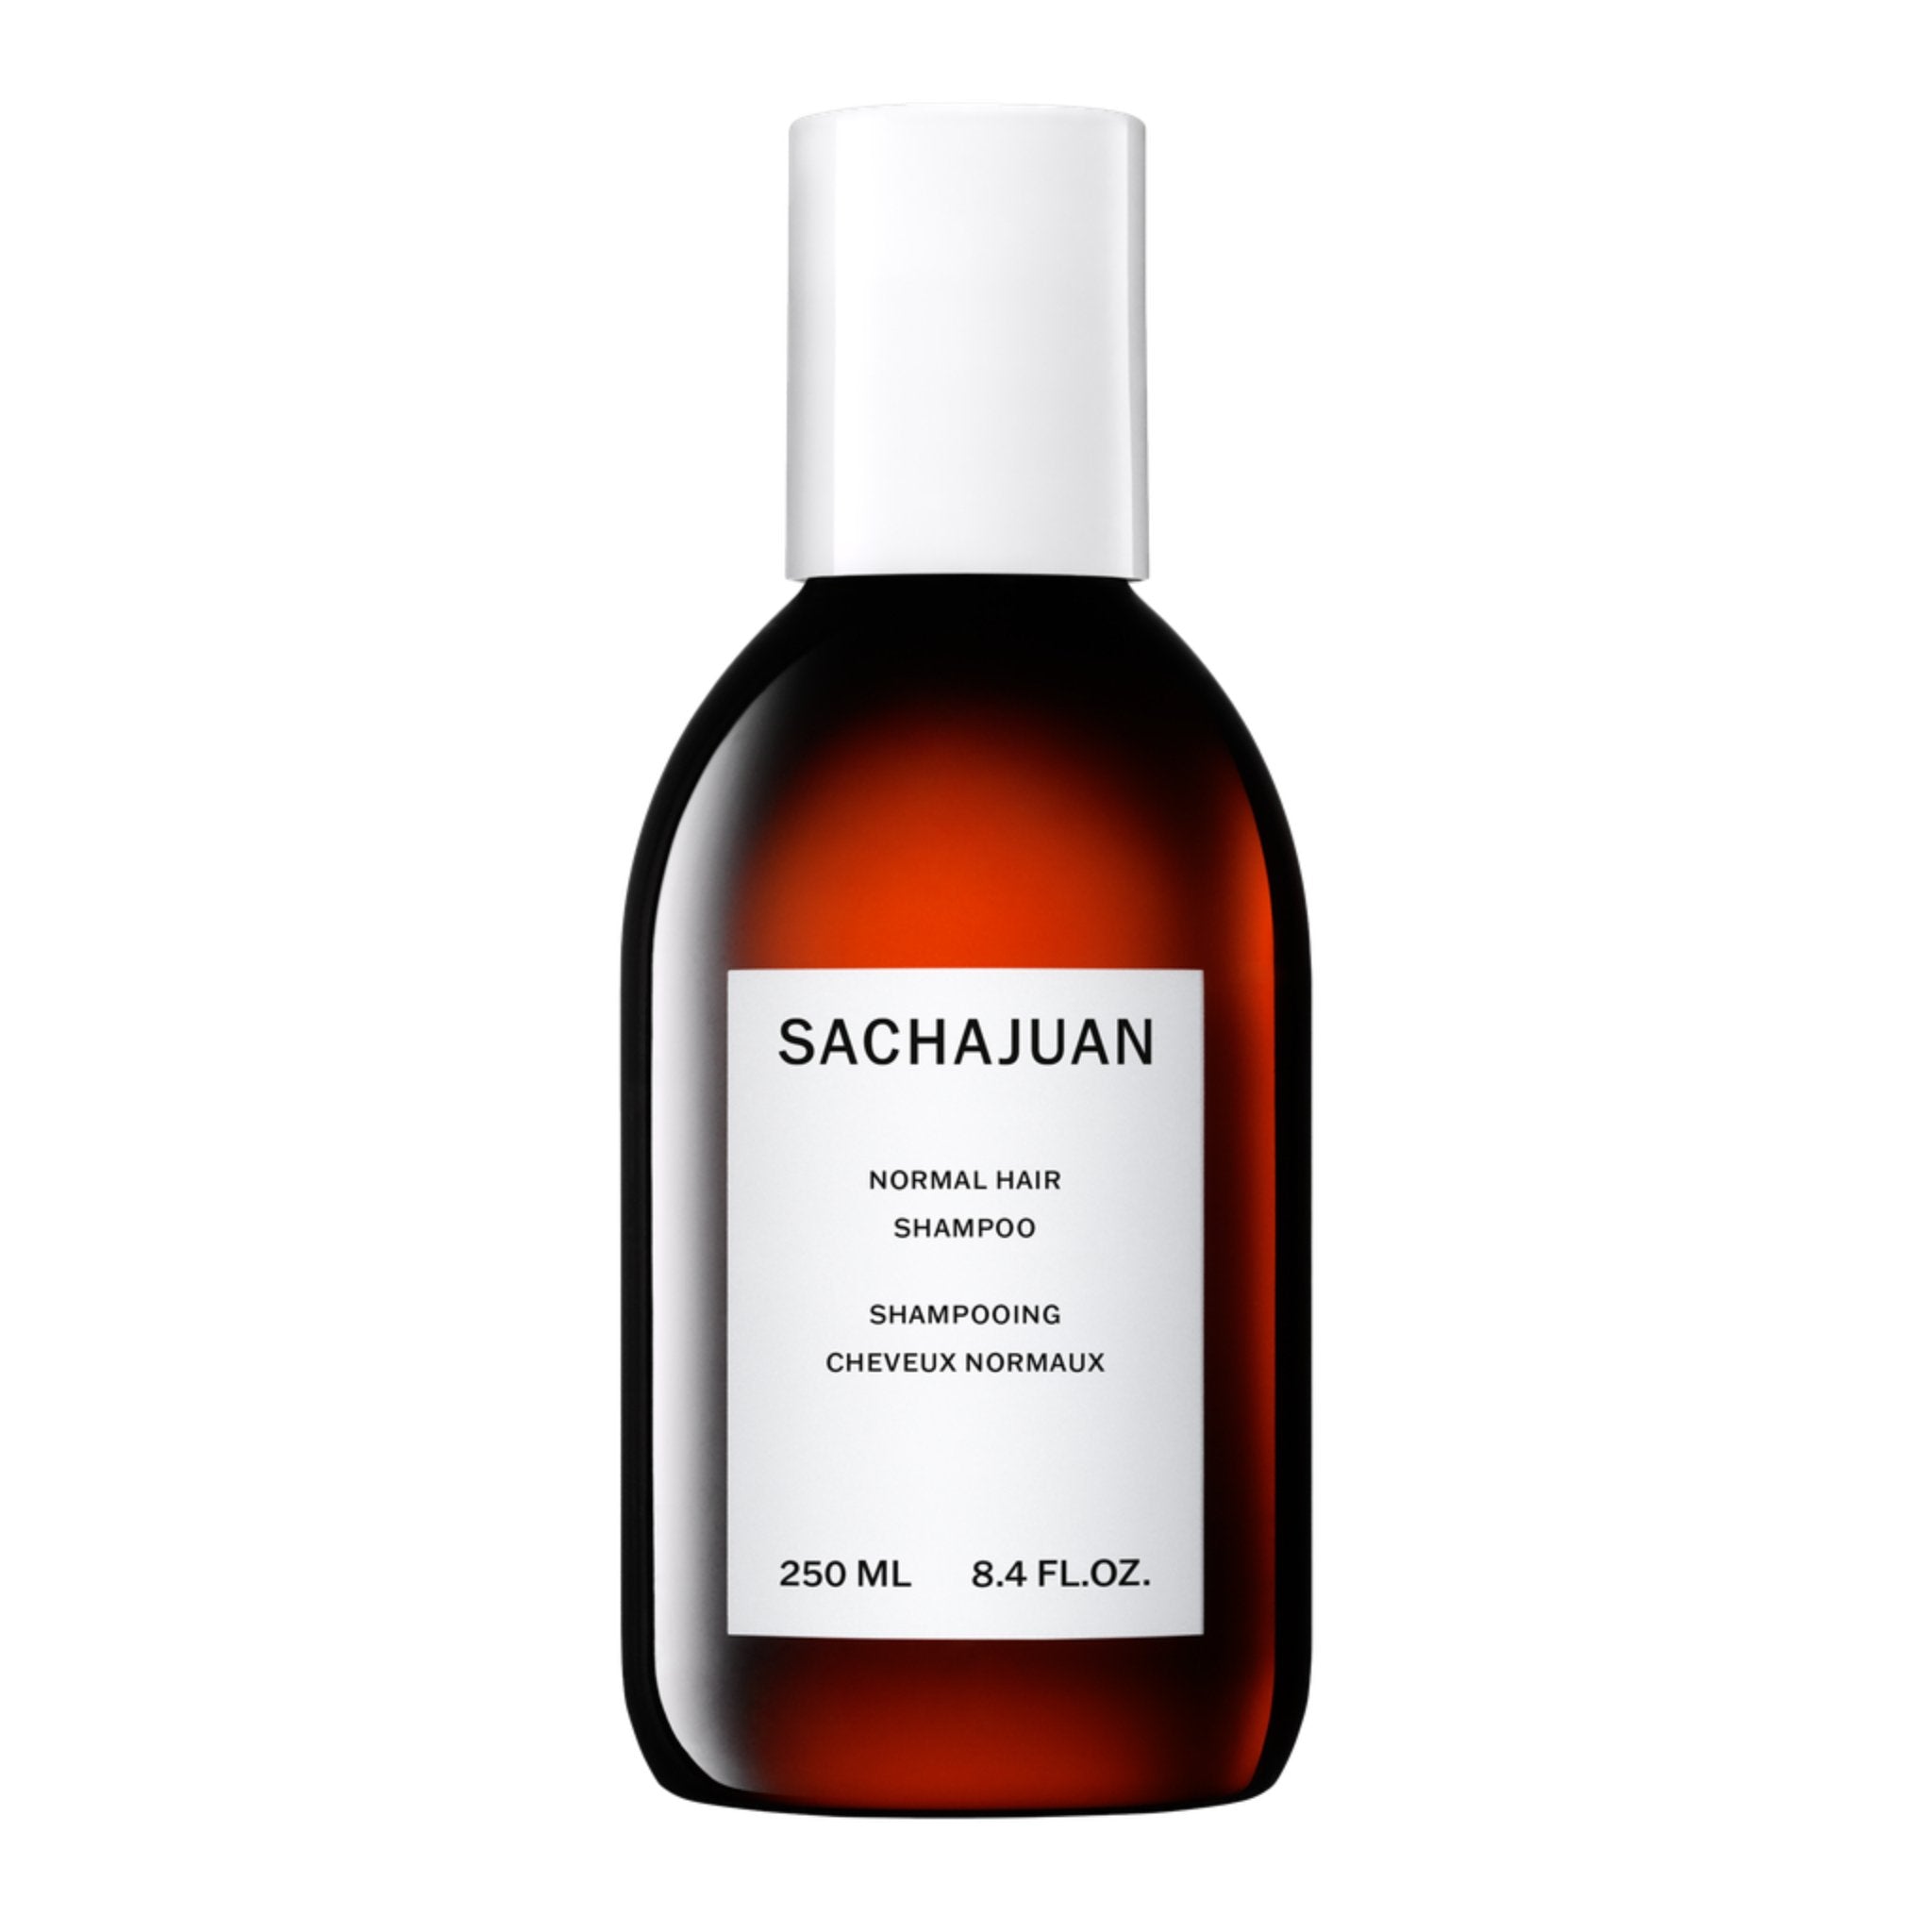 Sachajuan. Shampoing Cheveux Normaux - 250 ml - Concept C. Shop